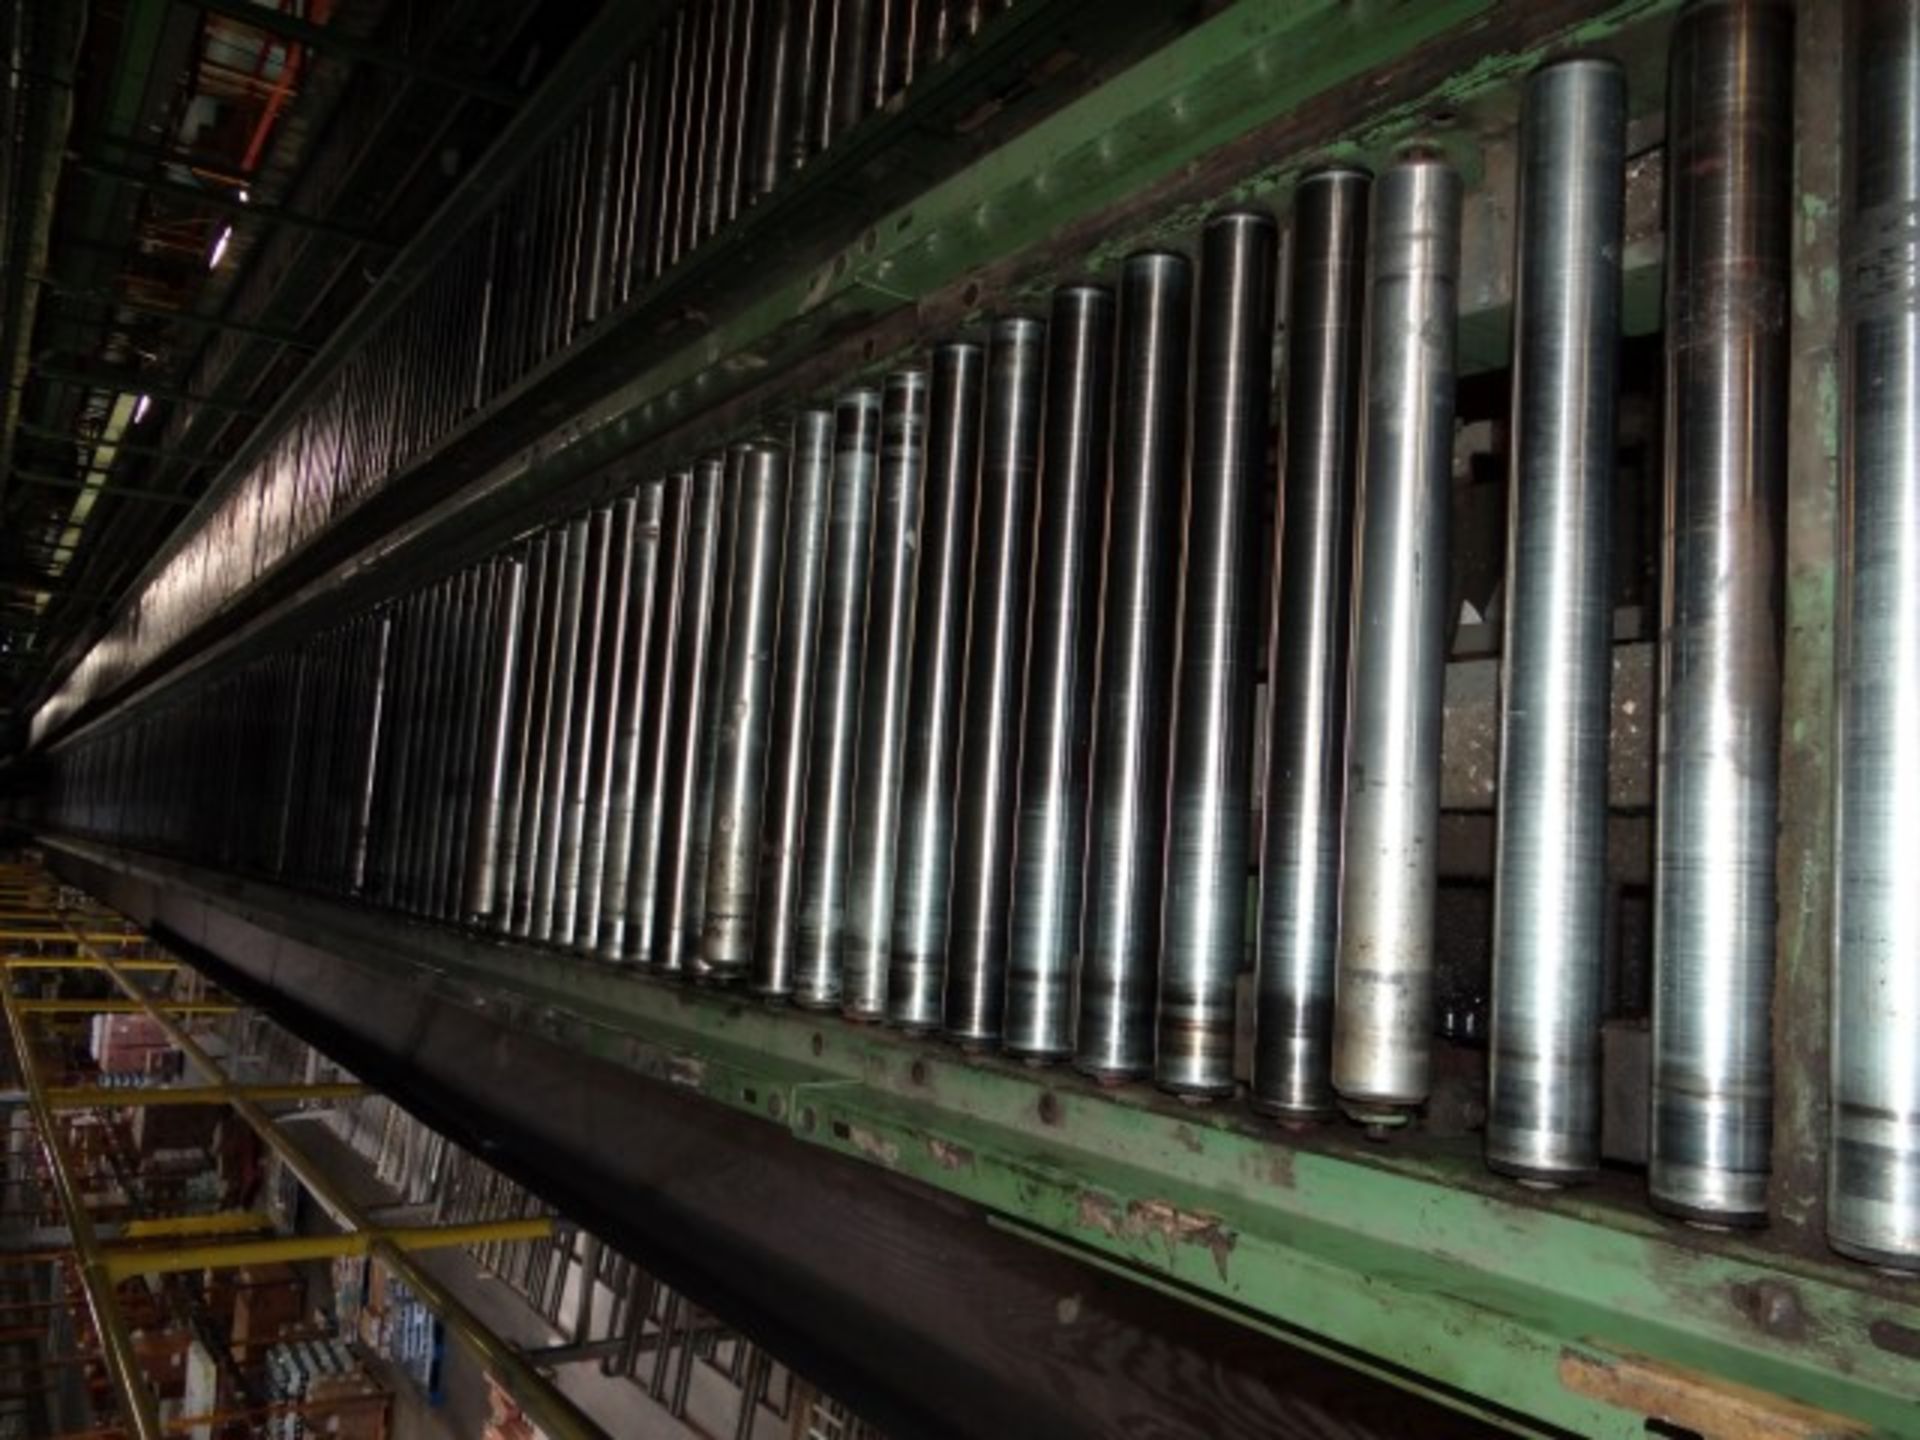 Line 6: Grocery Up Consisting of Approximately 550' of Roller, 30' Belt Conveyor, 12' Belt